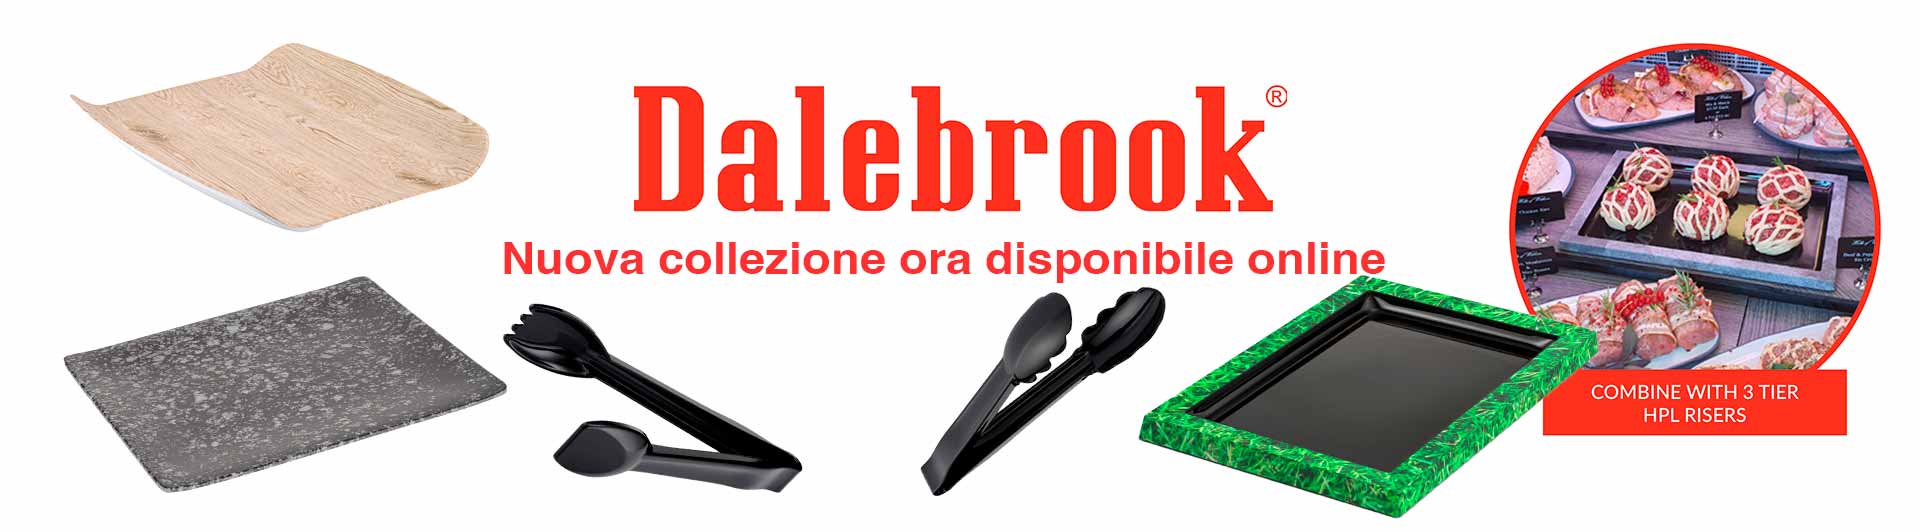 Dalebrook nuovi prodotti